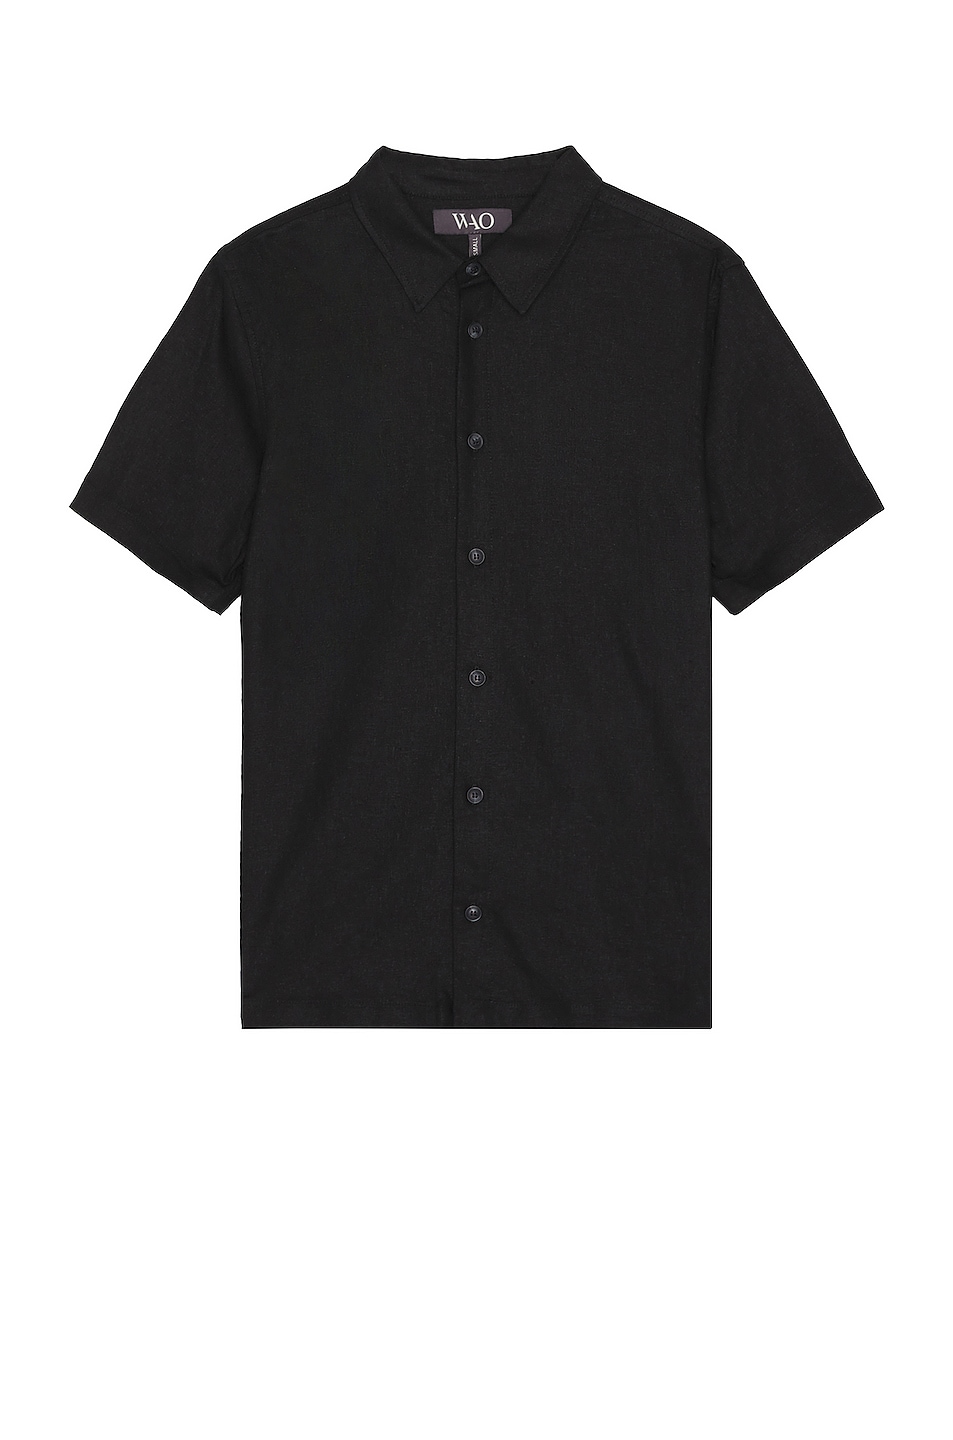 The Short Sleeve Shirt in Black